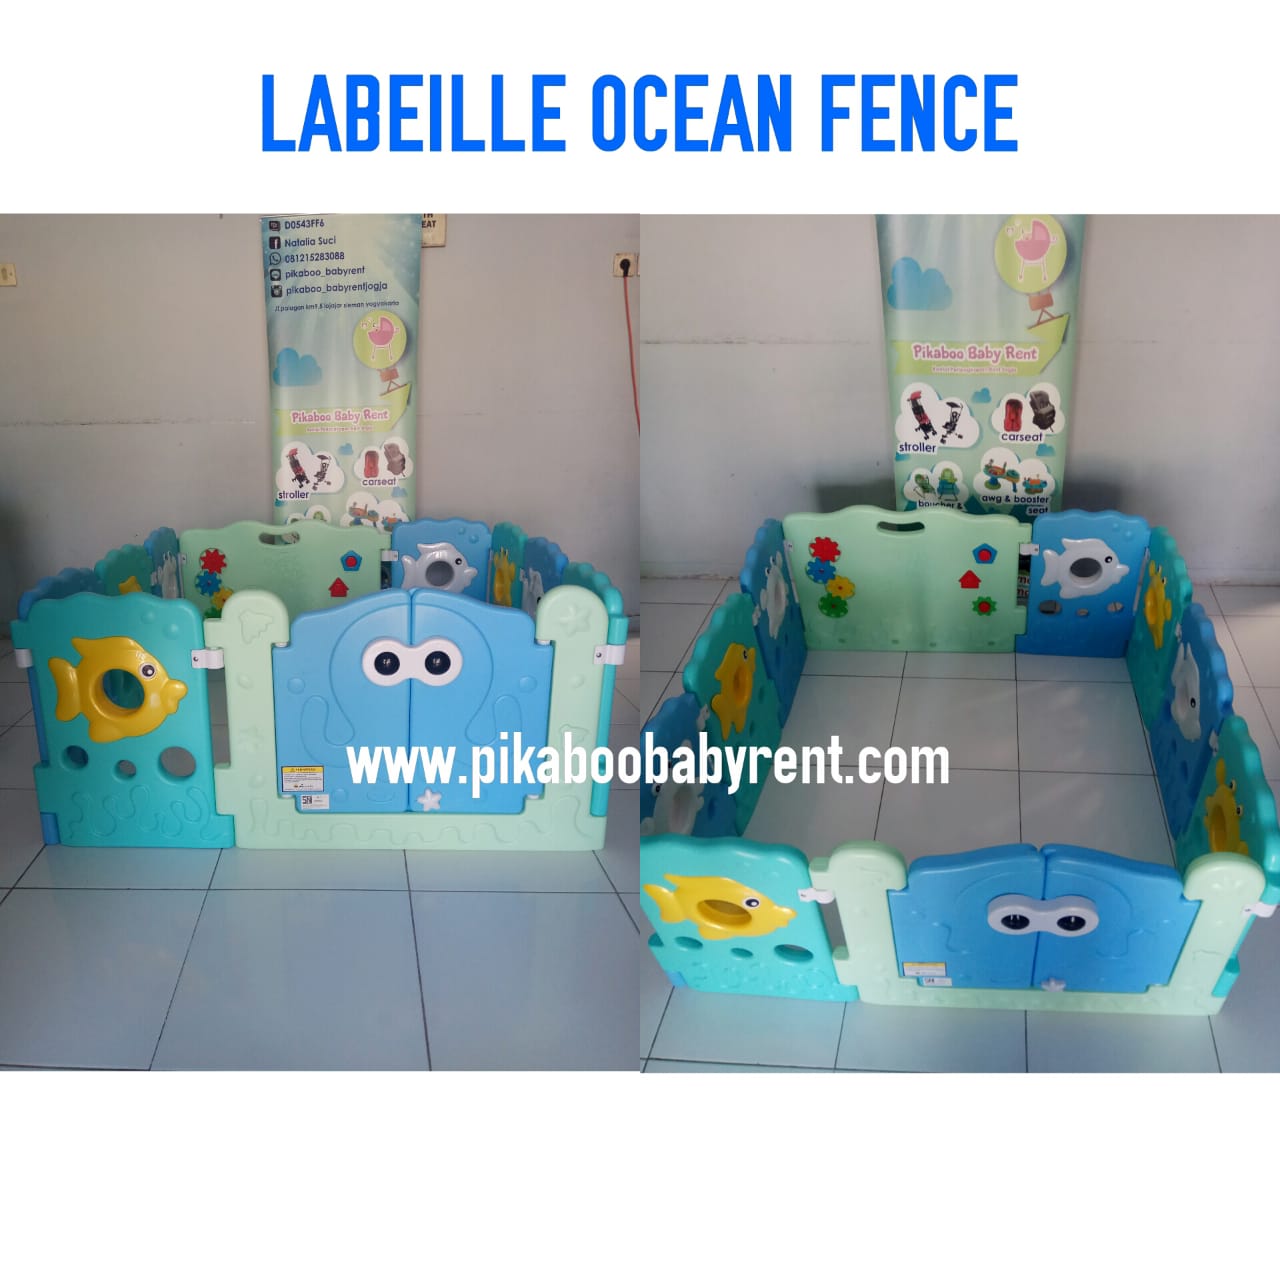 LABEILLE OCEAN FENCE